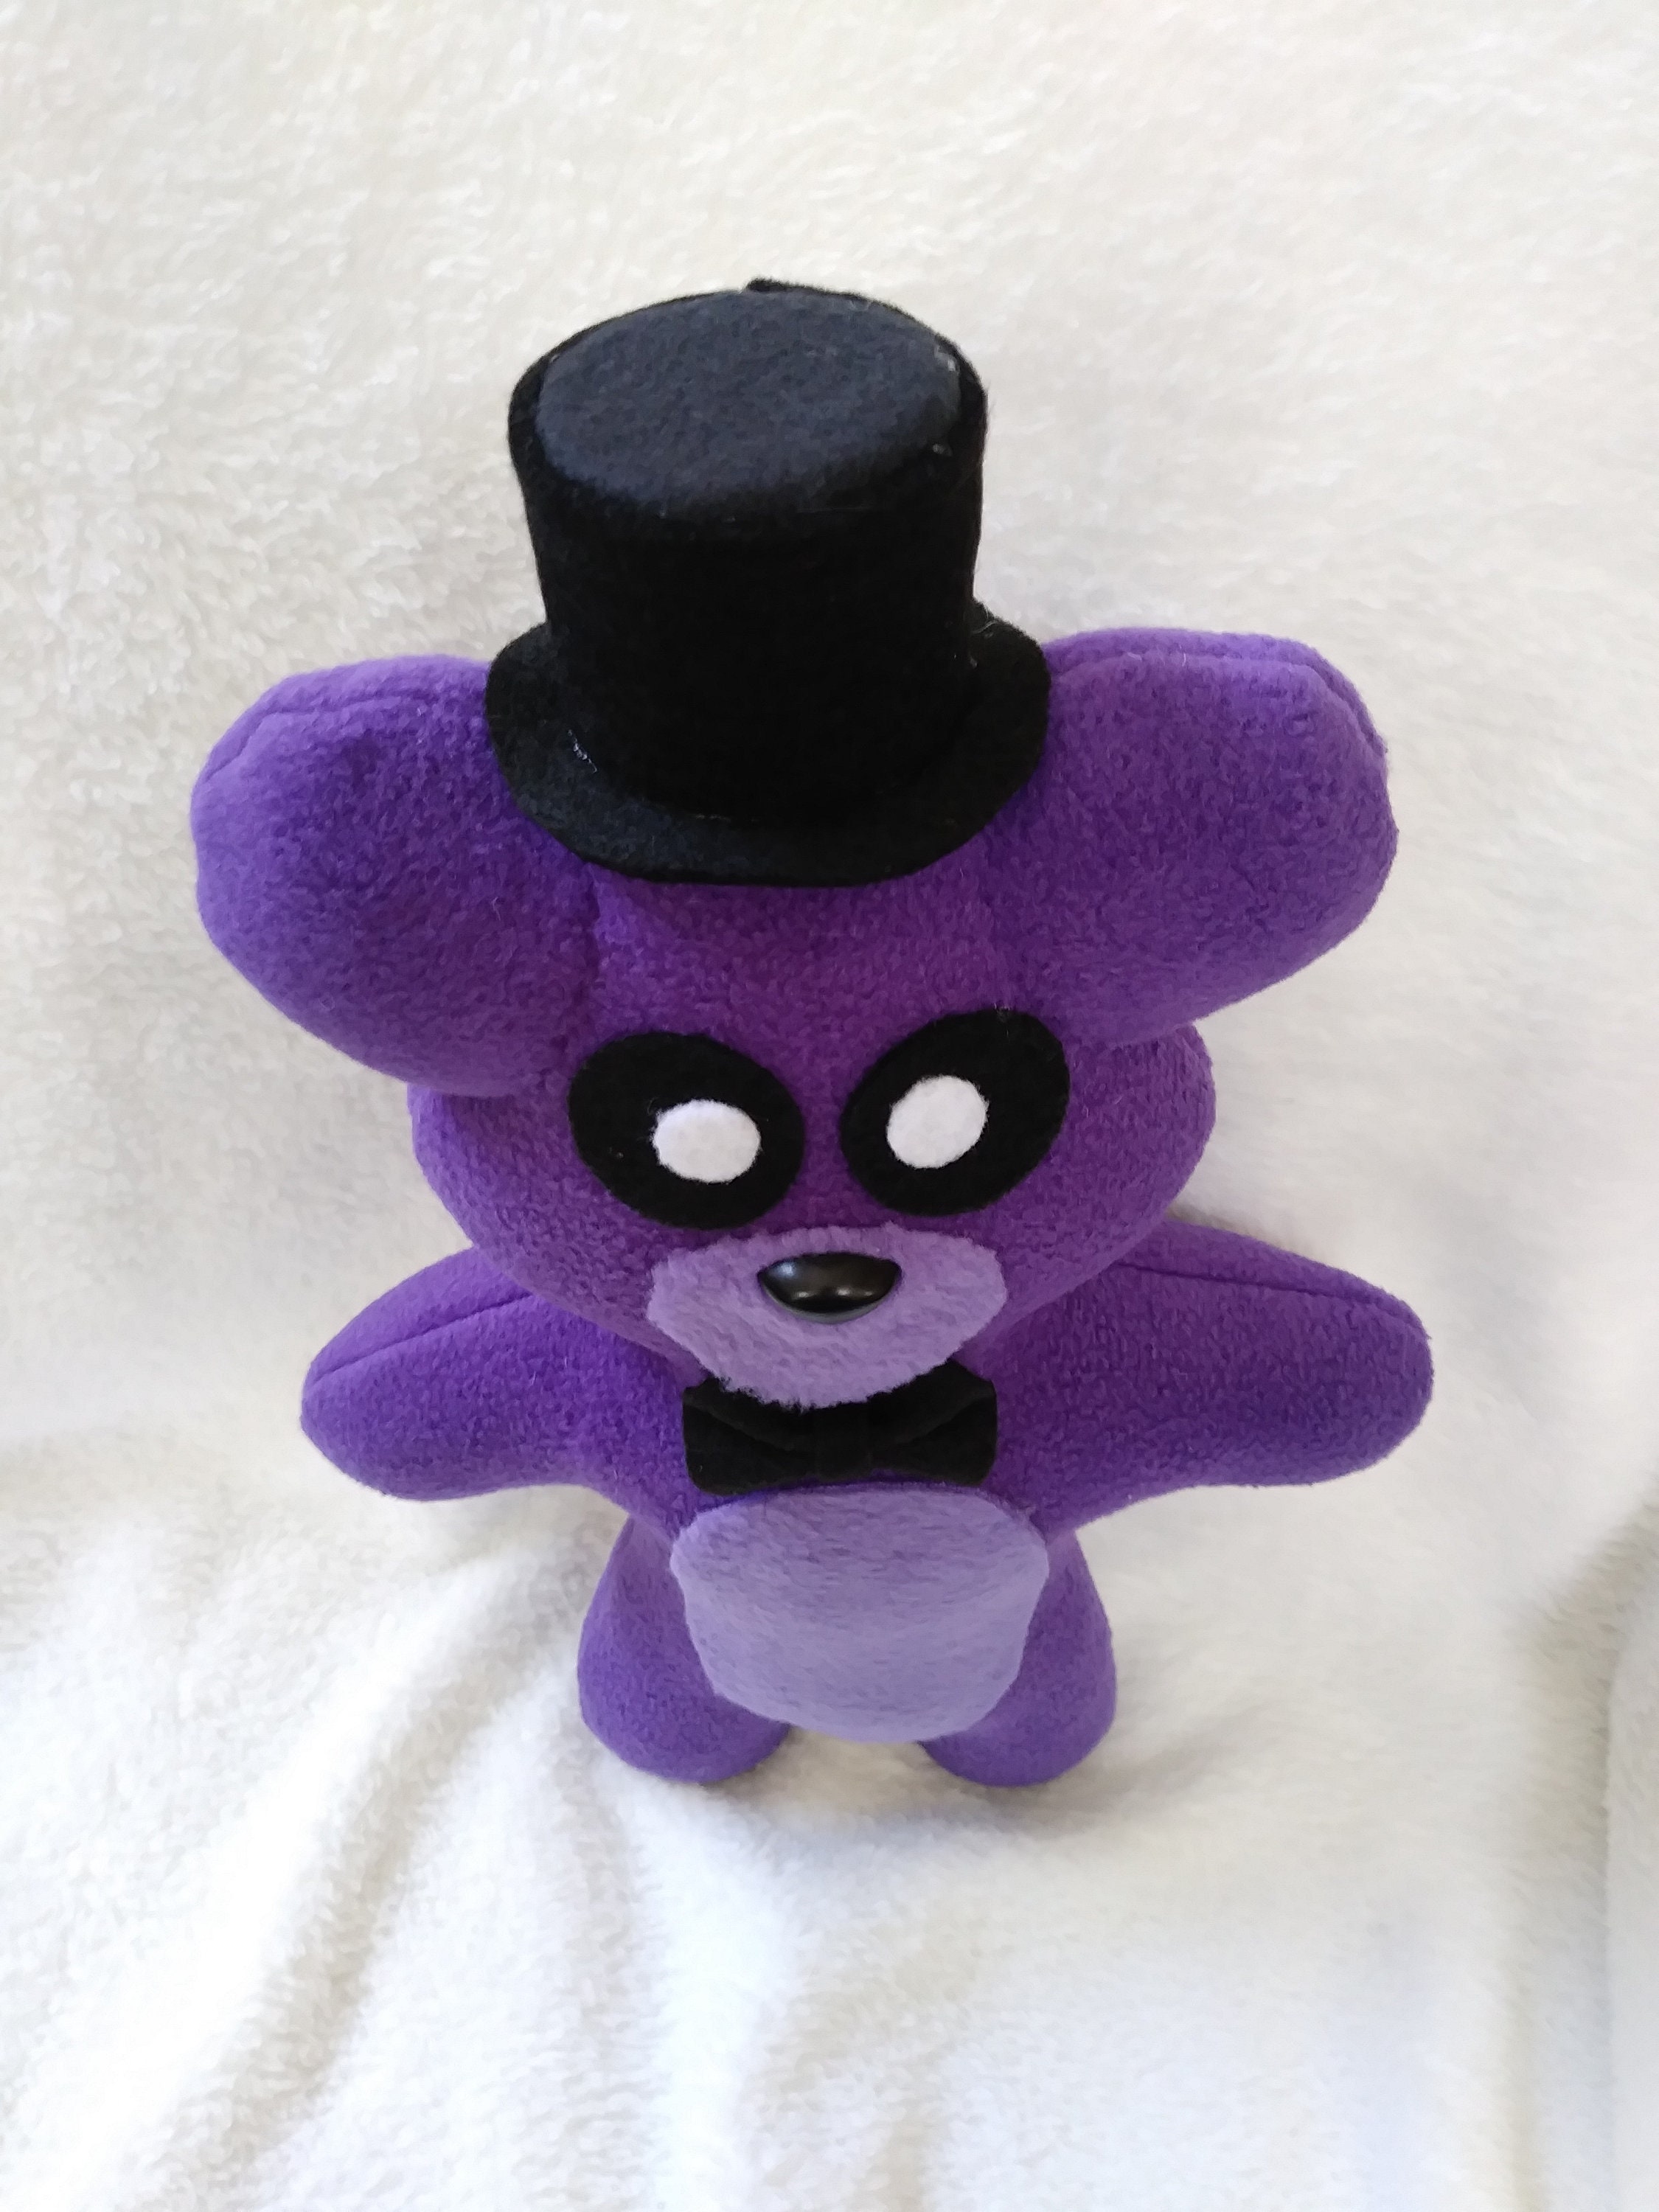 Shadow Freddy purple Version Handmade Fnaf Plush by Jusmade 